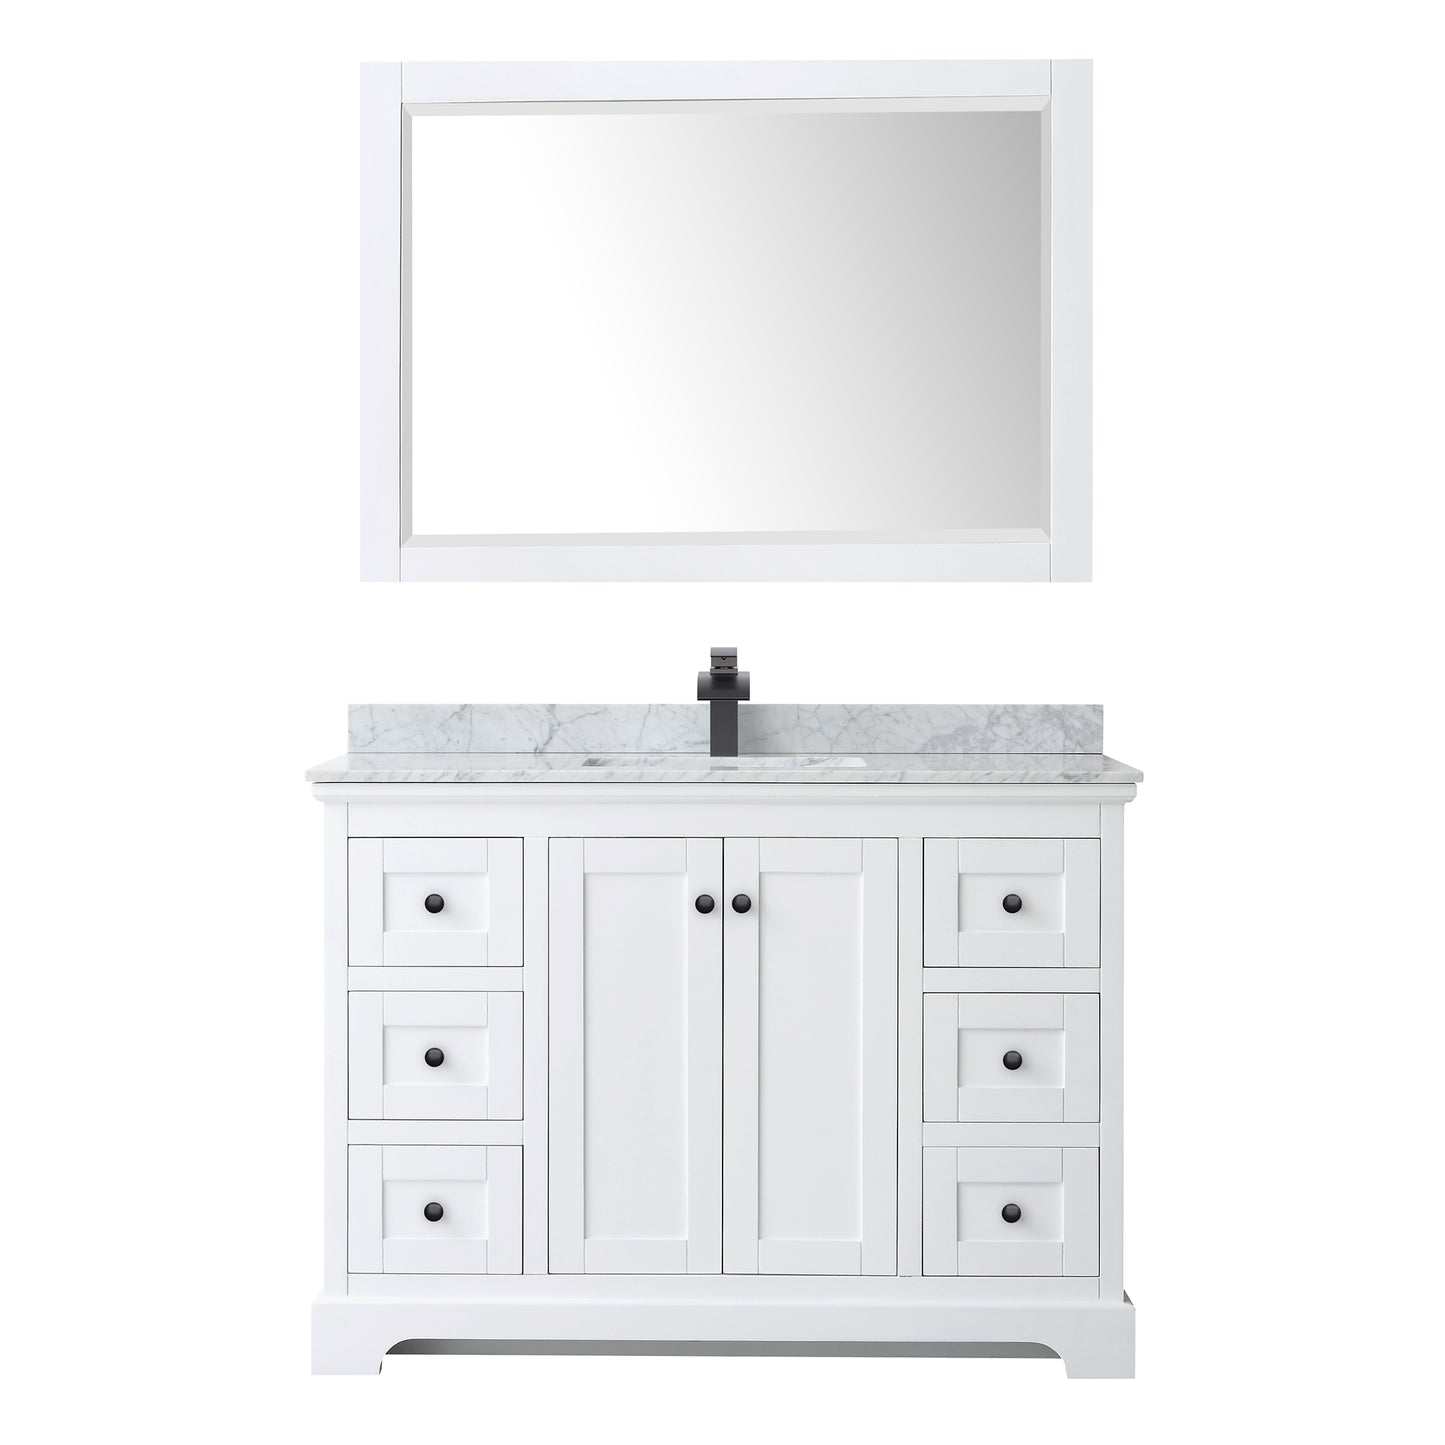 Wyndham Avery 48 Inch Single Bathroom Vanity White Carrara Marble Countertop, Undermount Square Sink in Matte Black Trim with 46 Inch Mirror - Luxe Bathroom Vanities